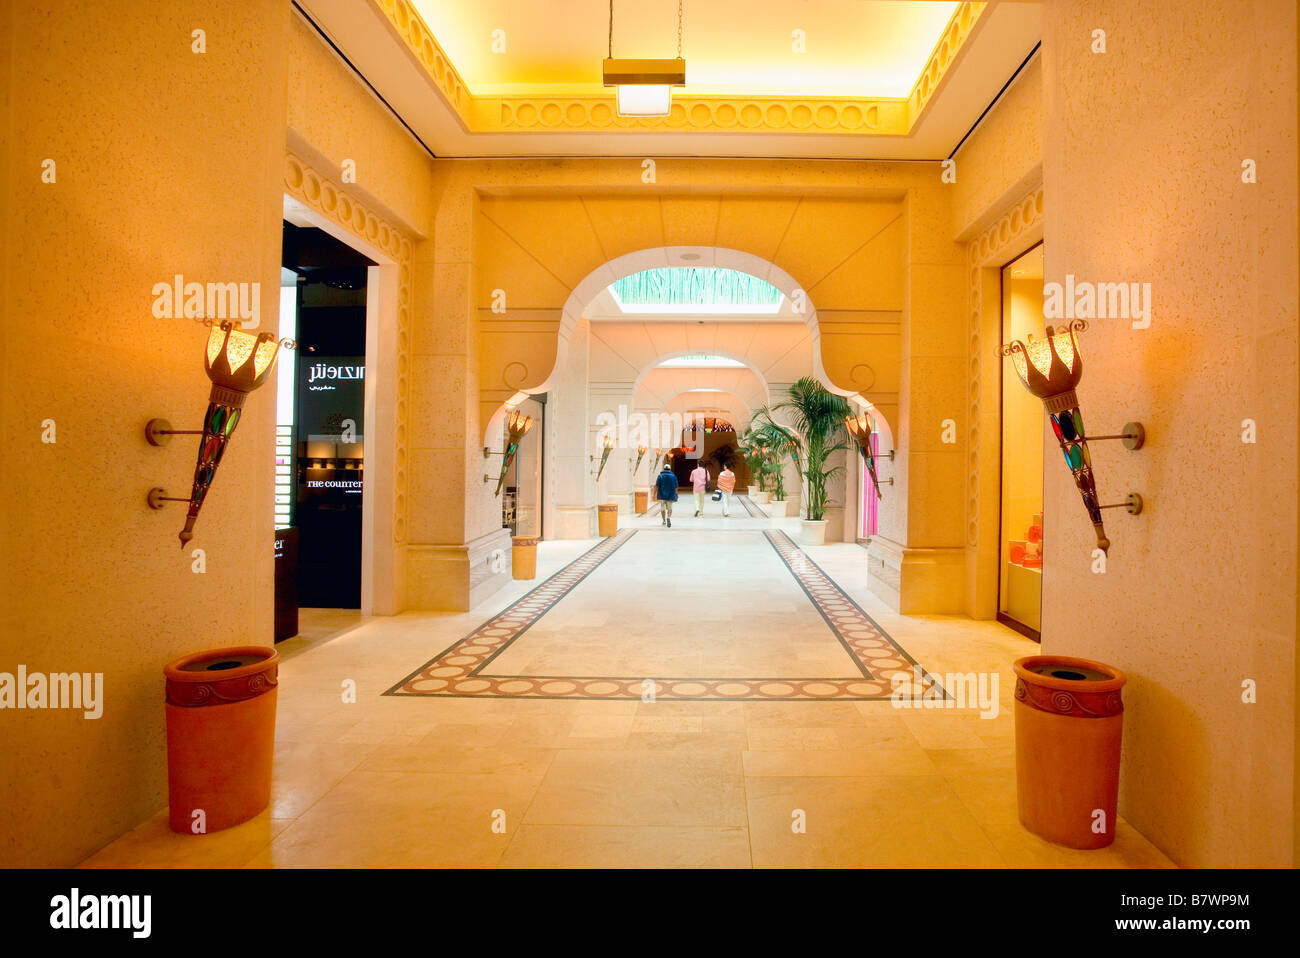 Interieur des Hotels Atlantis auf Palm Jumeirah Dubai Stockfoto